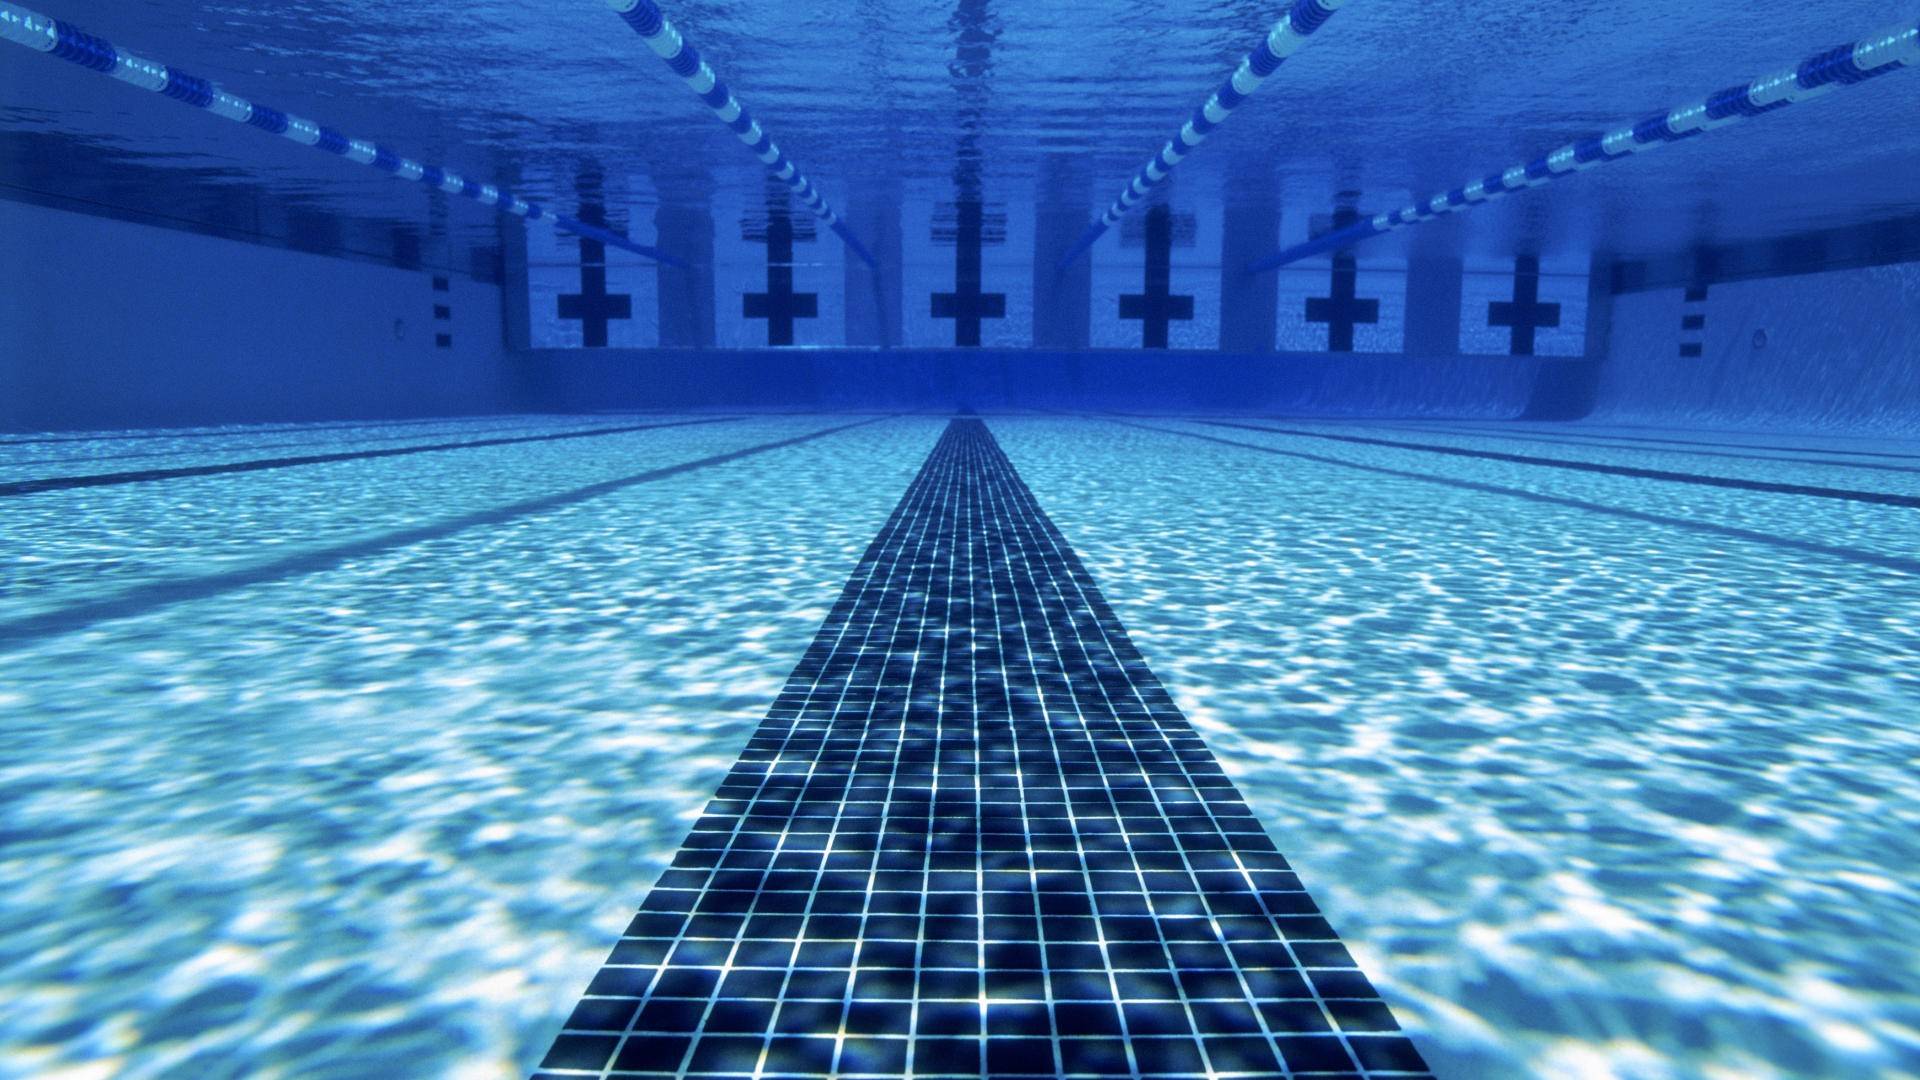 Swim wallpaper